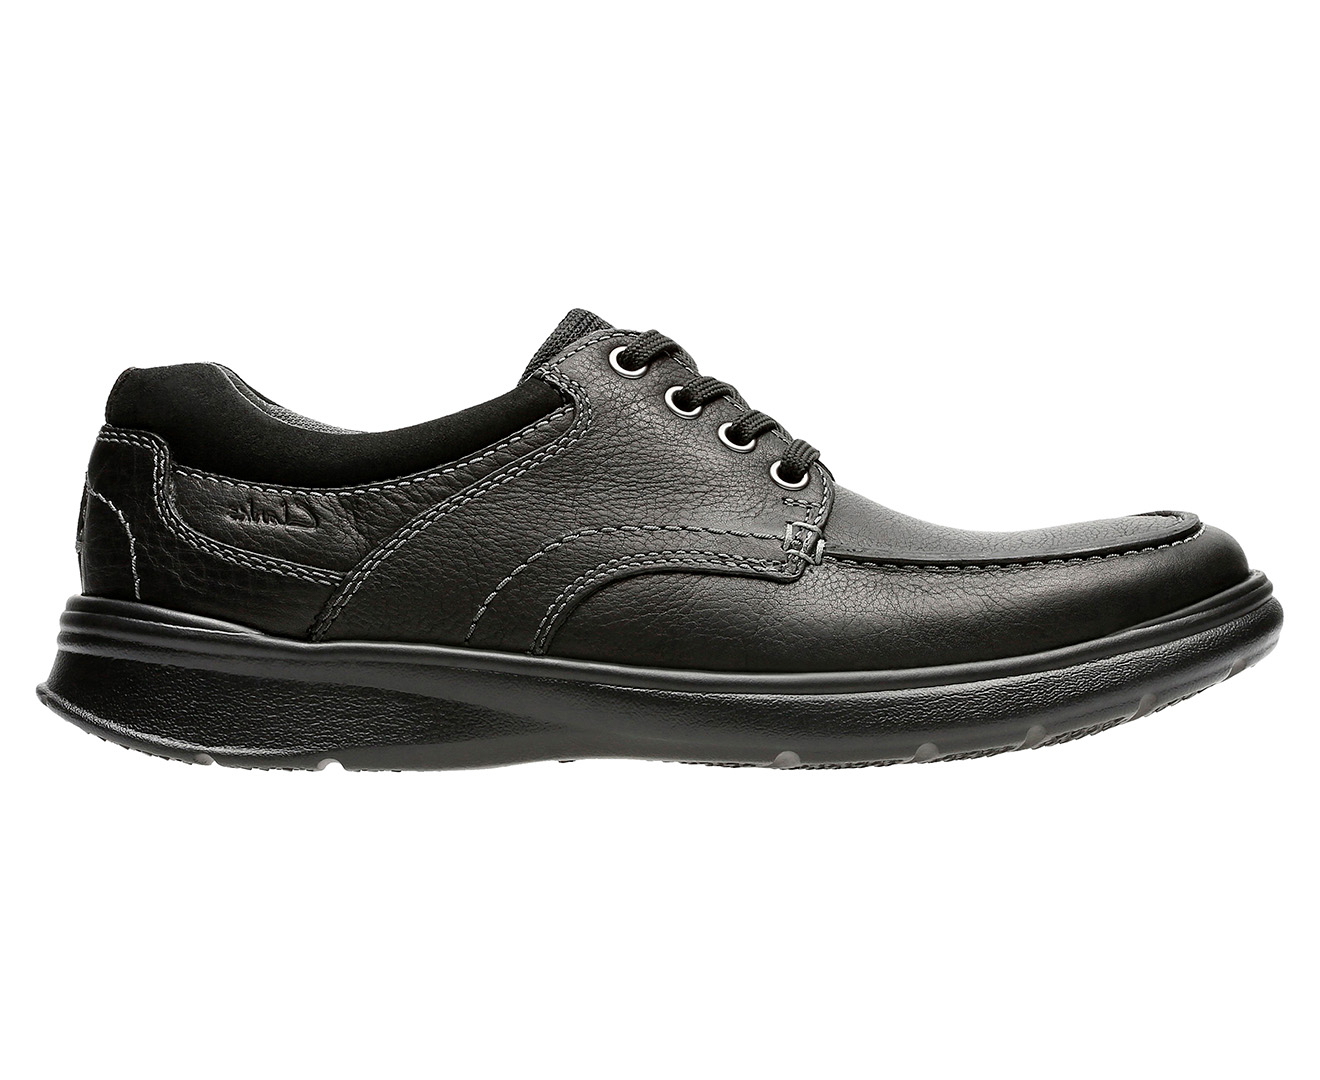 Clarks Men's Cotrell Edge Casual Shoes - Black | Catch.co.nz